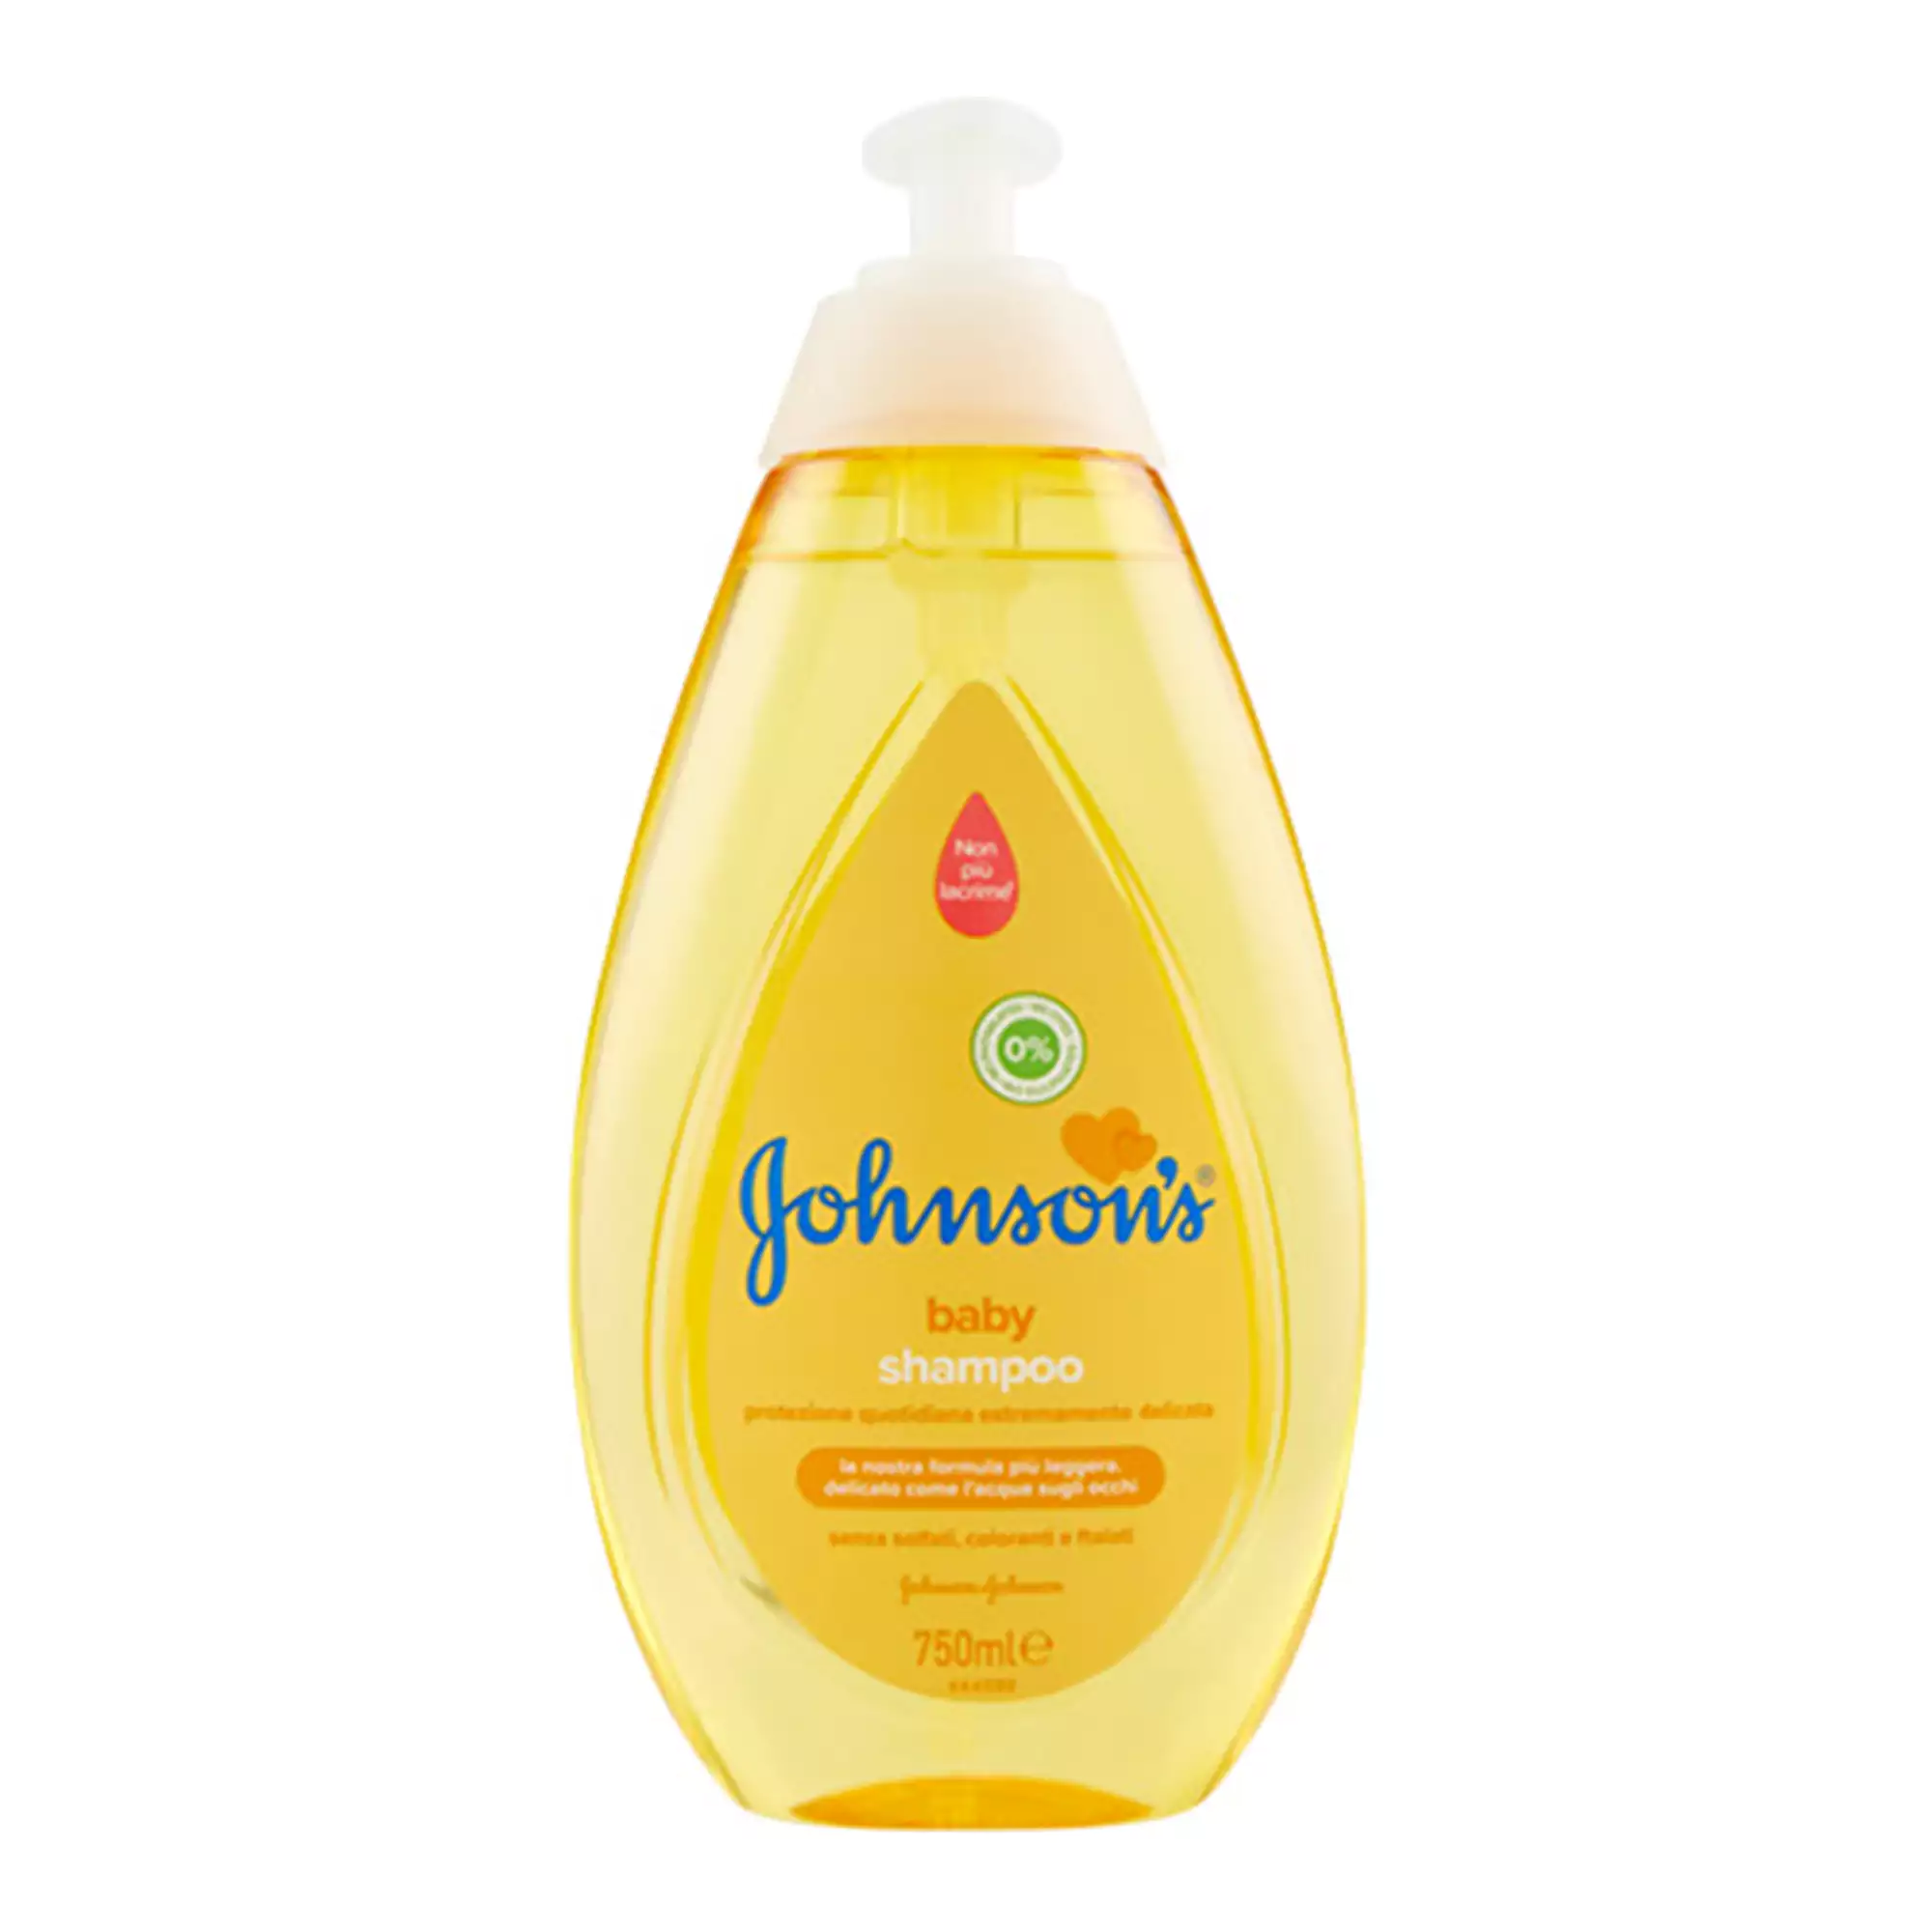 Johnson’s Σαμπουάν Baby Shampoo Αντλία Classic 750ml - Femme Fatale - Johnson's Σαμπουάν Baby Shampoo Αντλία Classic 750ml